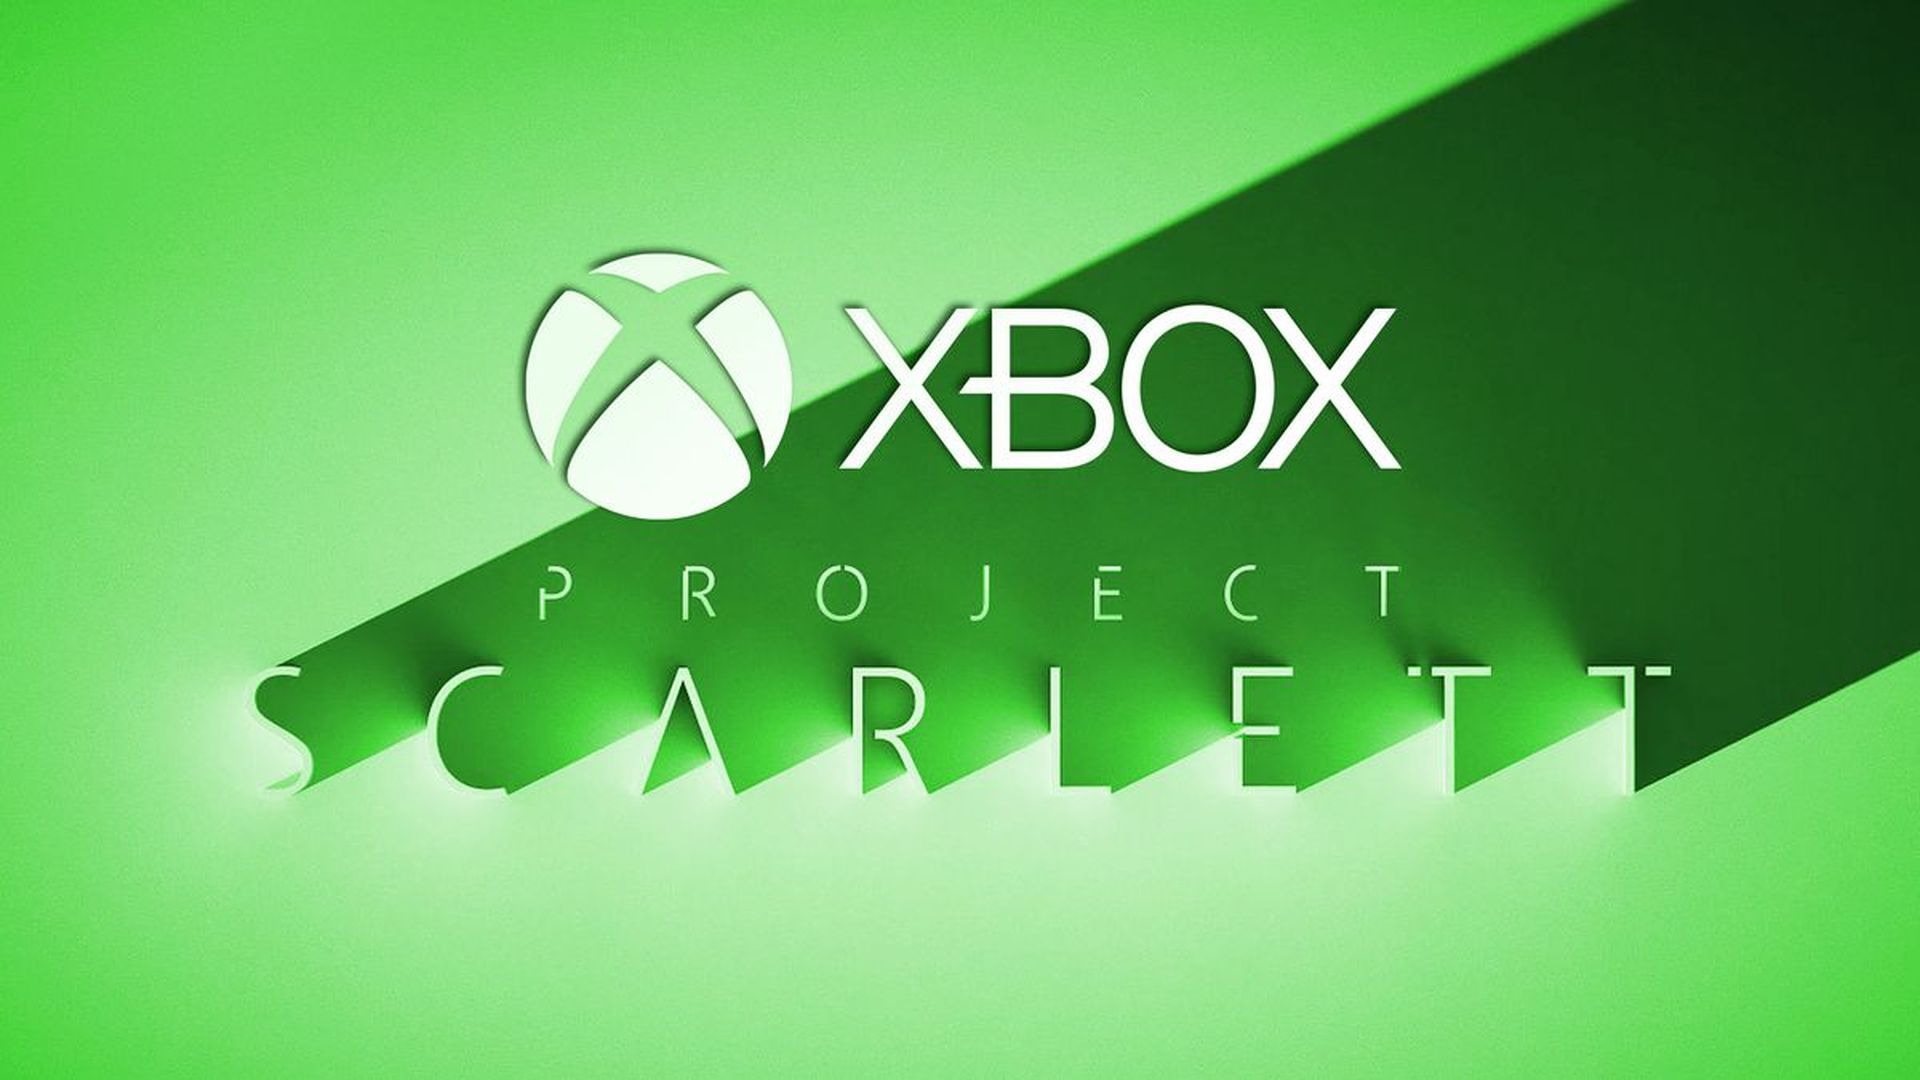 Kit pengembangan PS5 akan memberikan hasil yang lebih baik daripada Xbox Scarlett saat ini 20